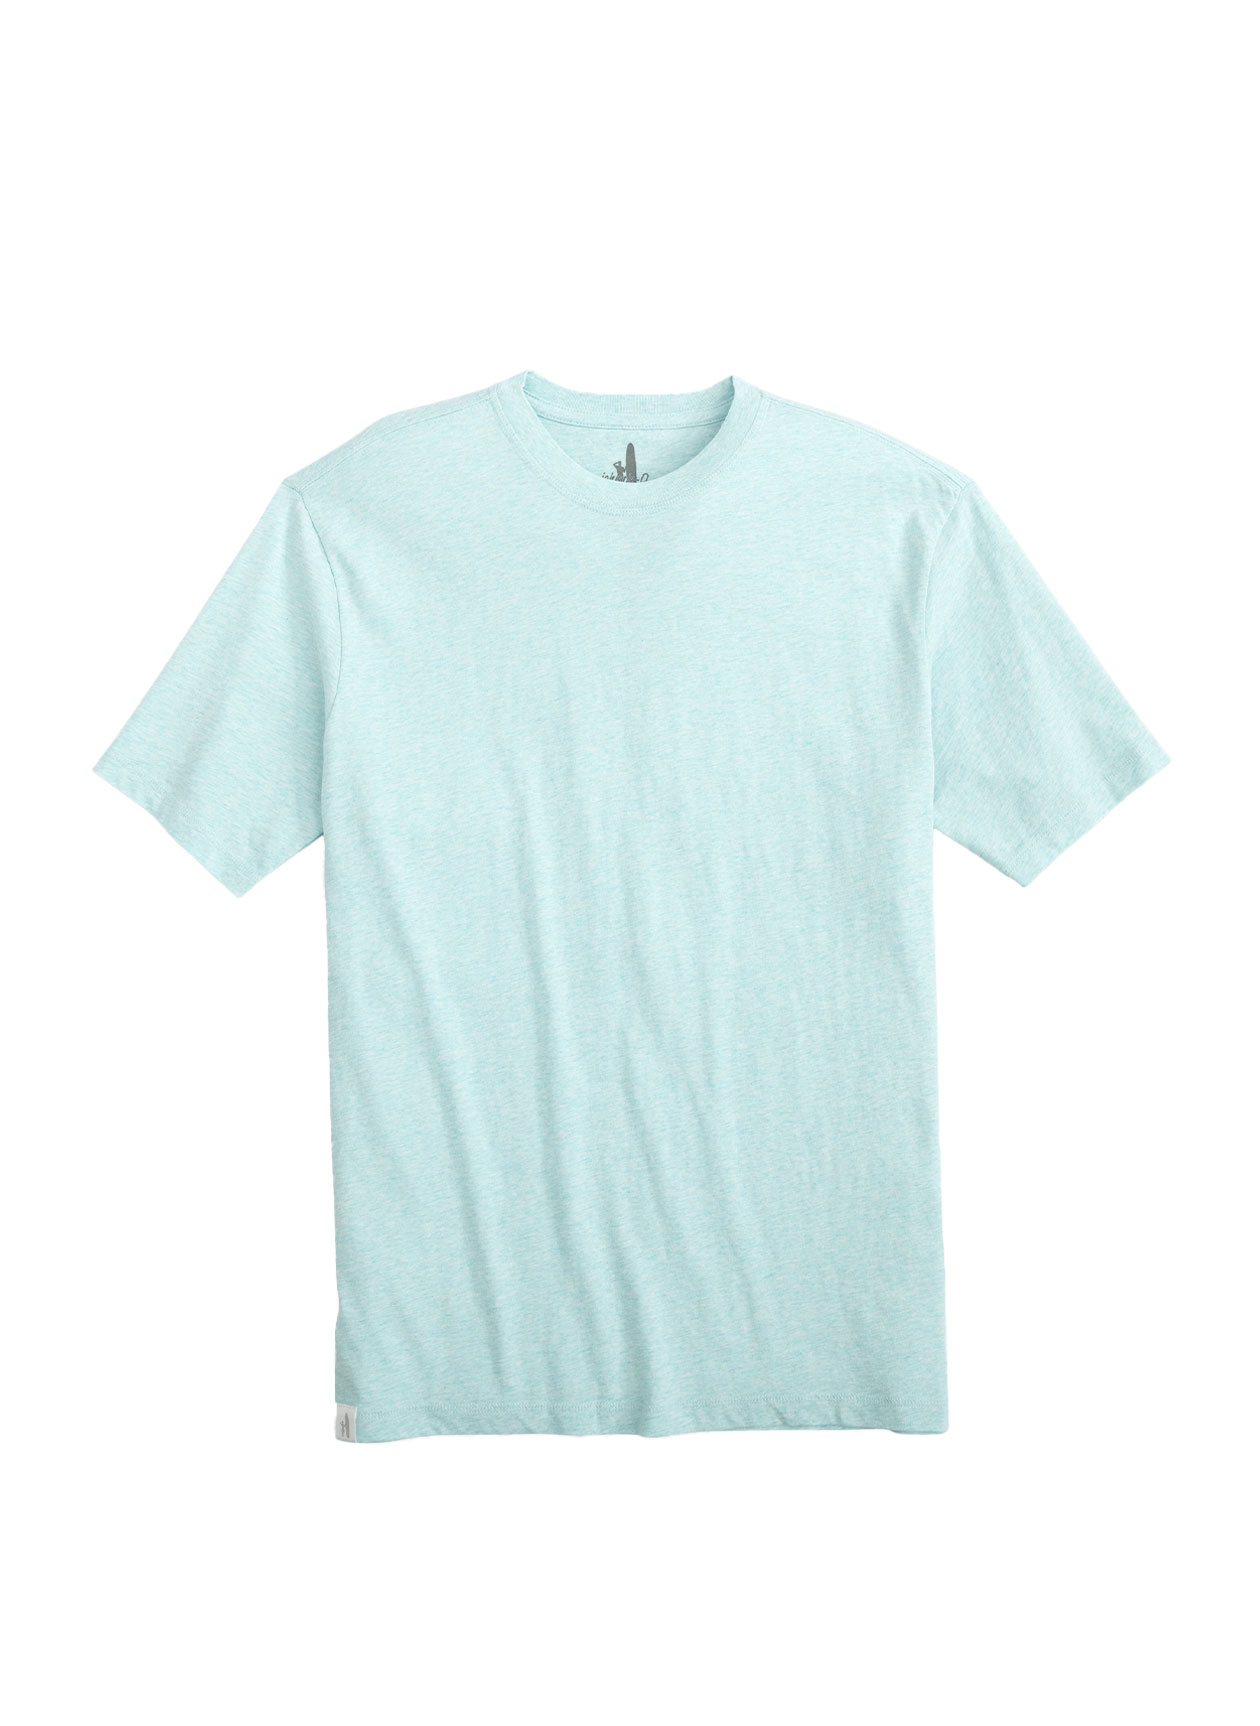 Johnnie-O Men's Whaler Heathered Spencer T-Shirt